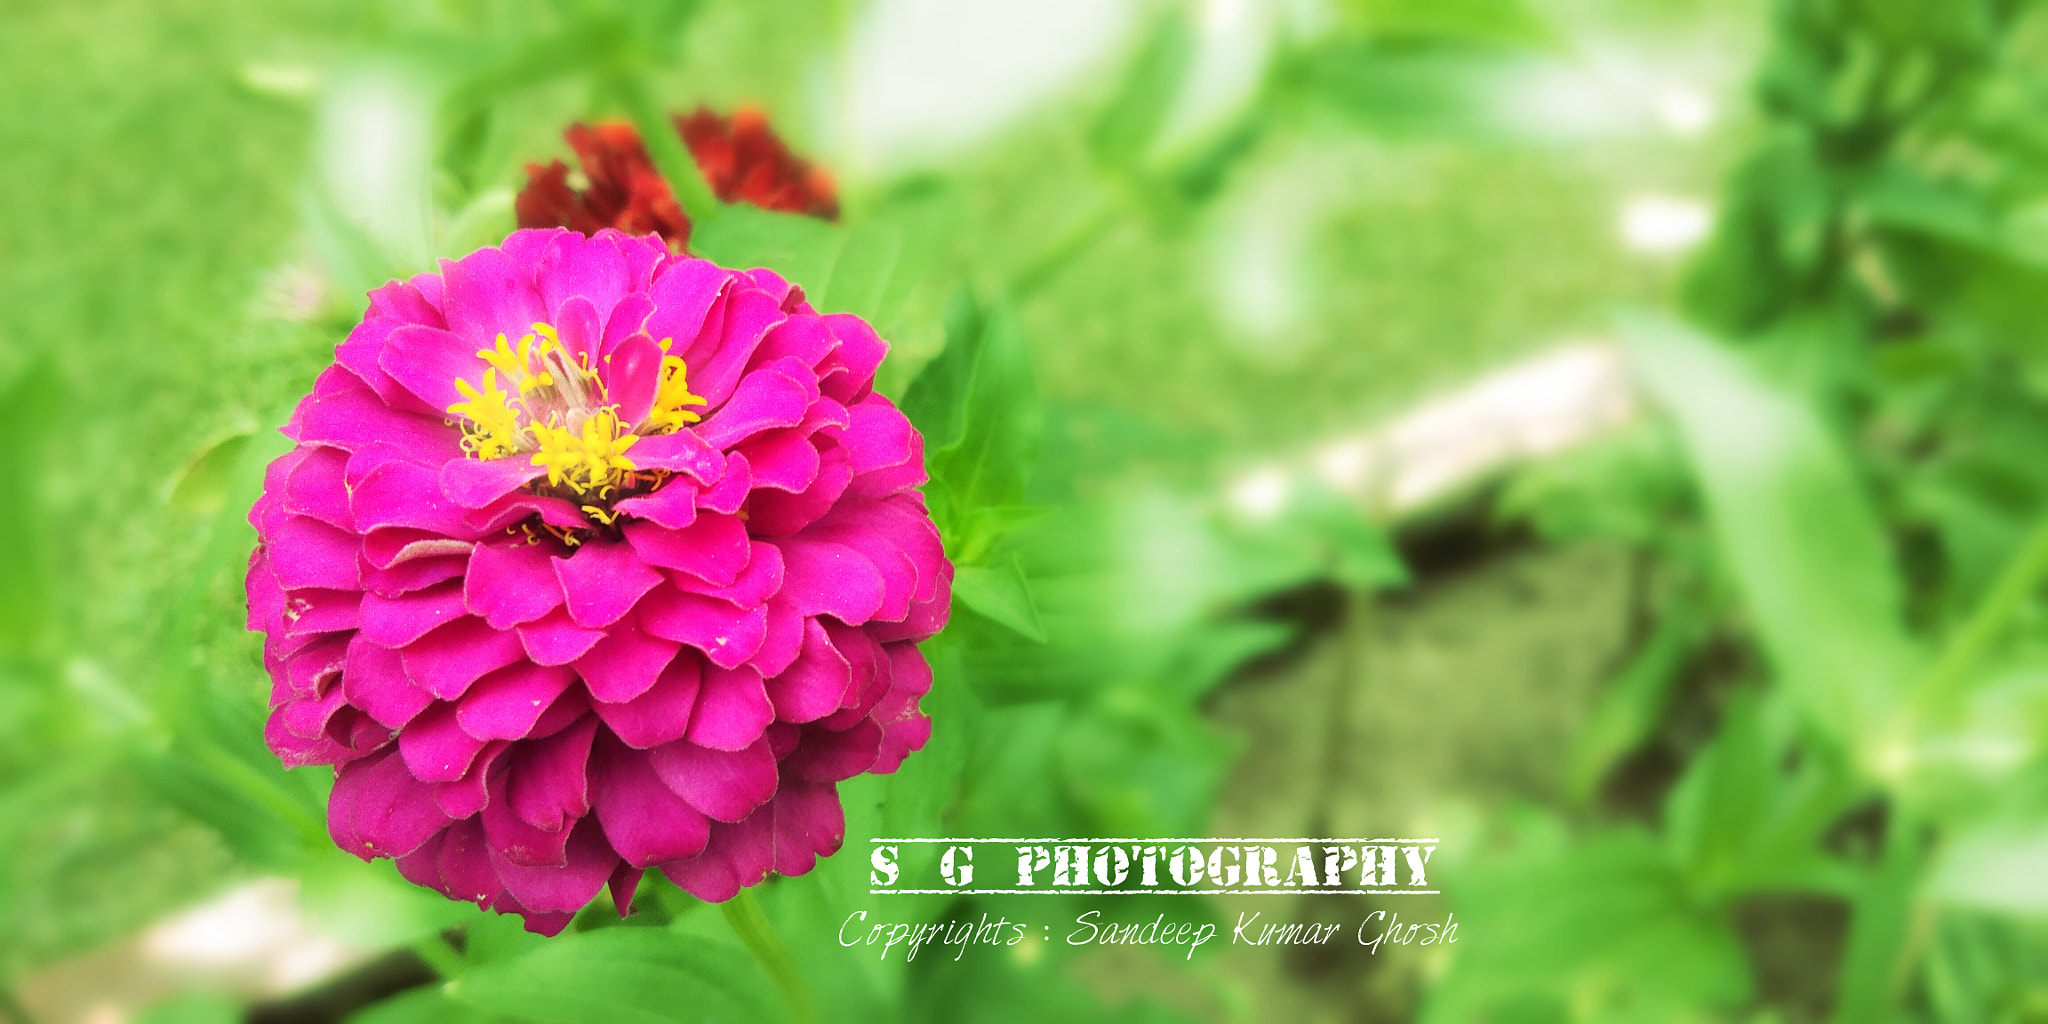 vivo 1718 sample photo. Flower photography